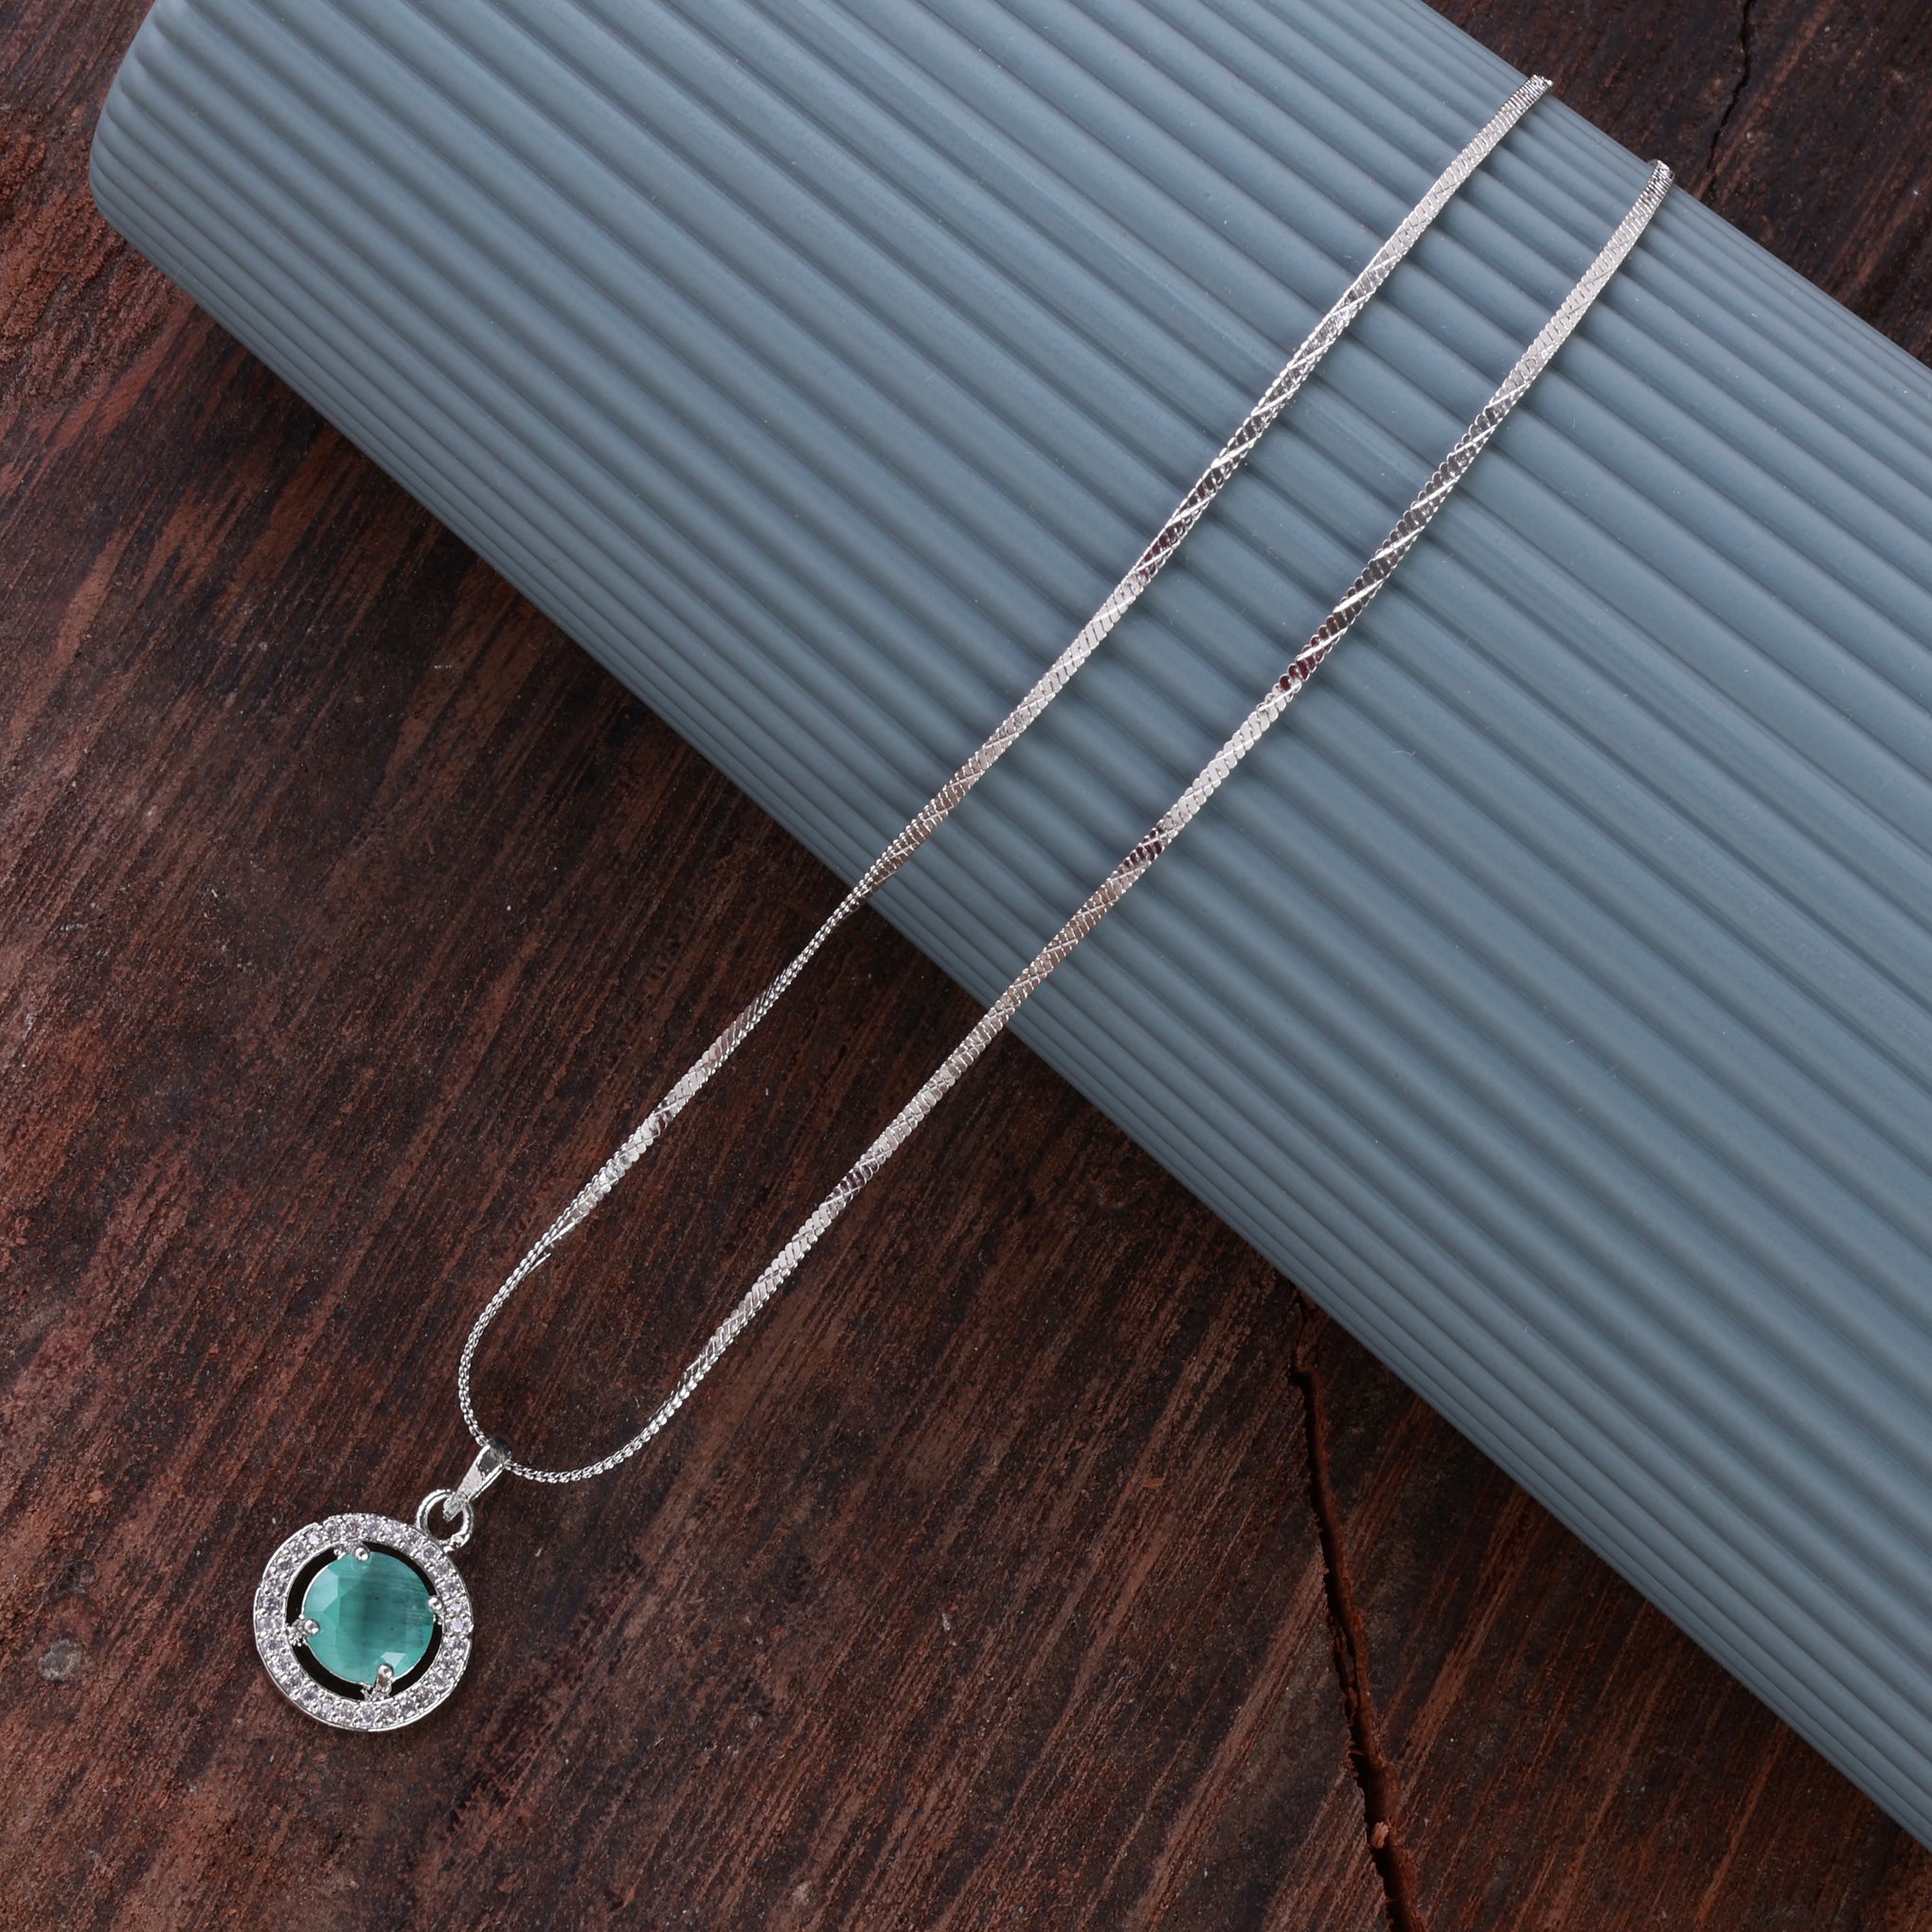 Mint Green Jack American Diamond Pendant with Chain